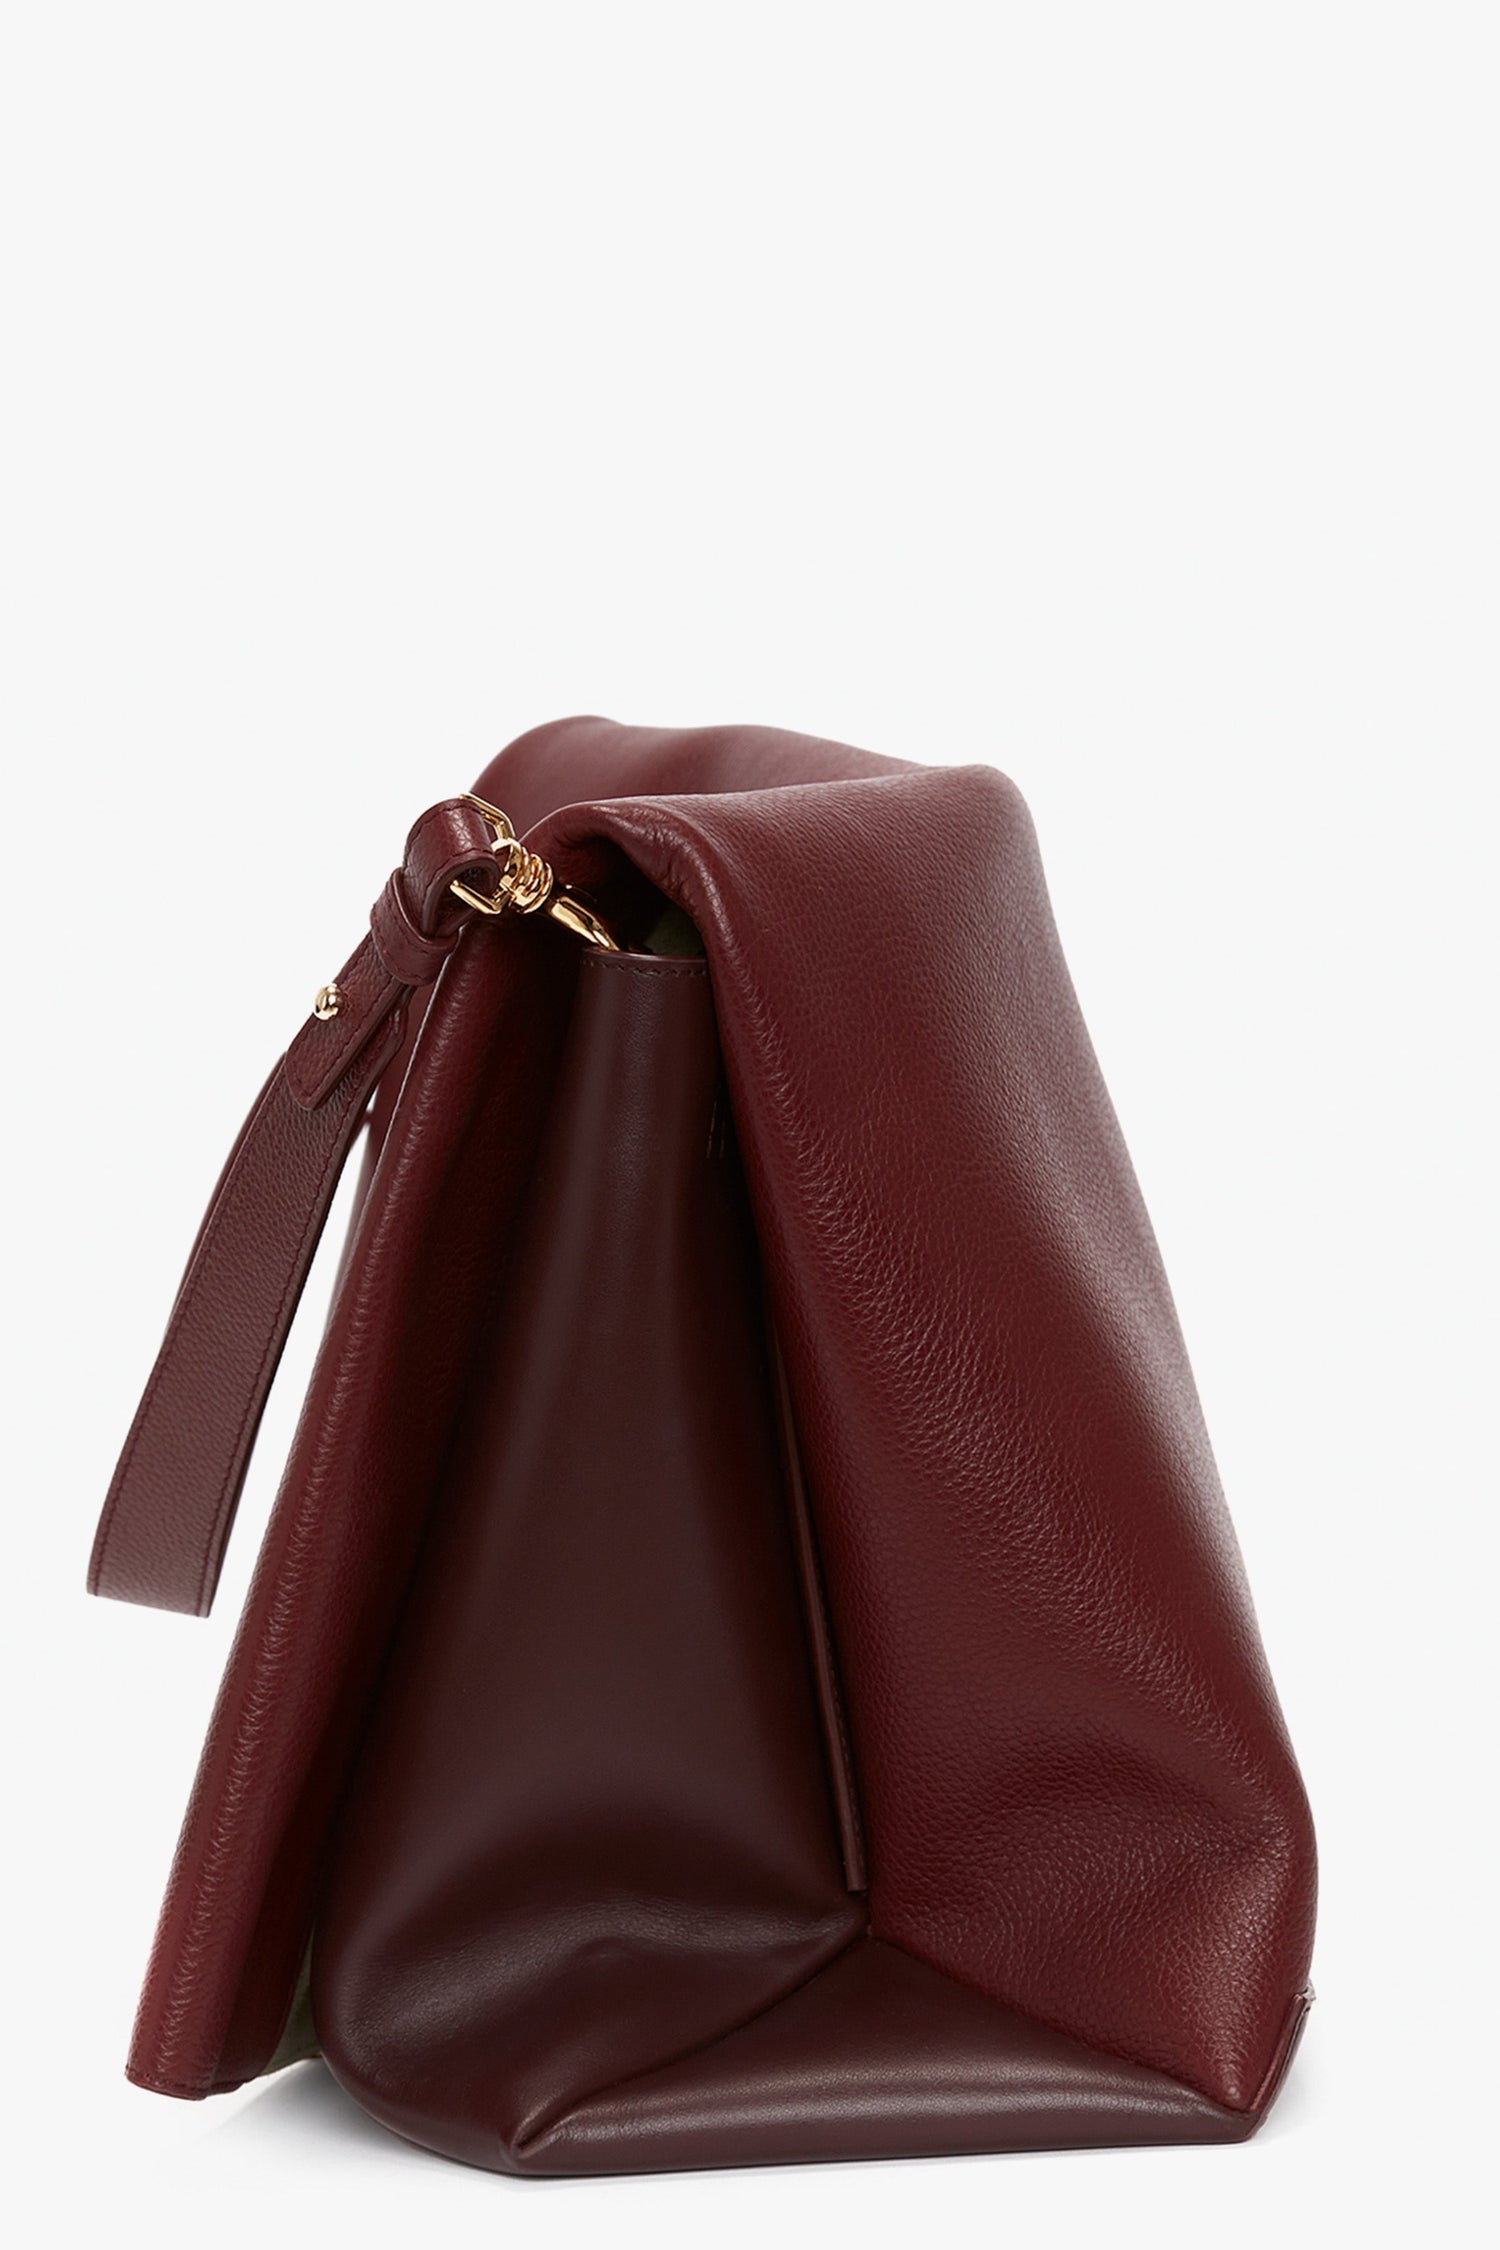 Longchamp Vintage Leather Purse Shoulder Bag Hobo Messenger | Etsy | Leather  purses, Bags, Leather